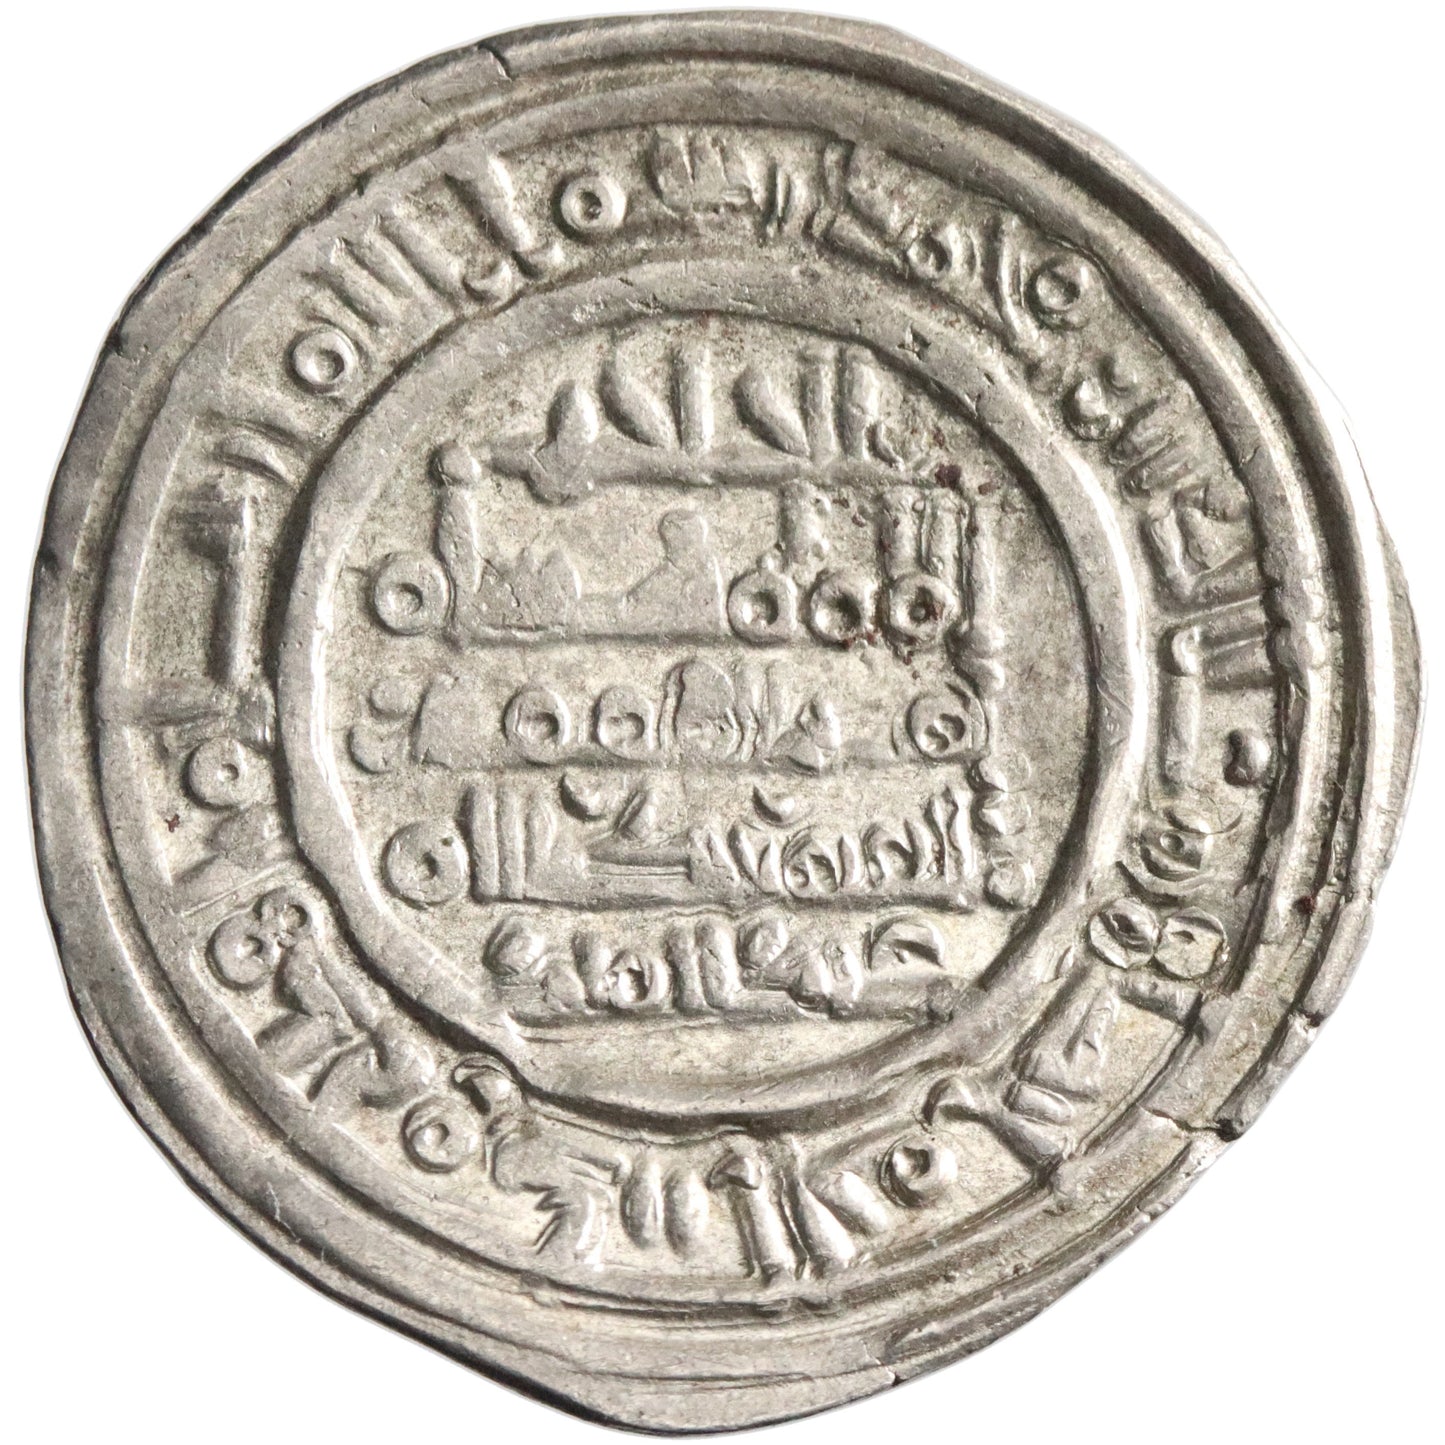 Umayyad of Spain, Hisham II, silver dirham, al-Andalus (Spain) mint, AH 393, citing al-Hajib 'Abd al-Malik and the mint director 'Abd al-Malik